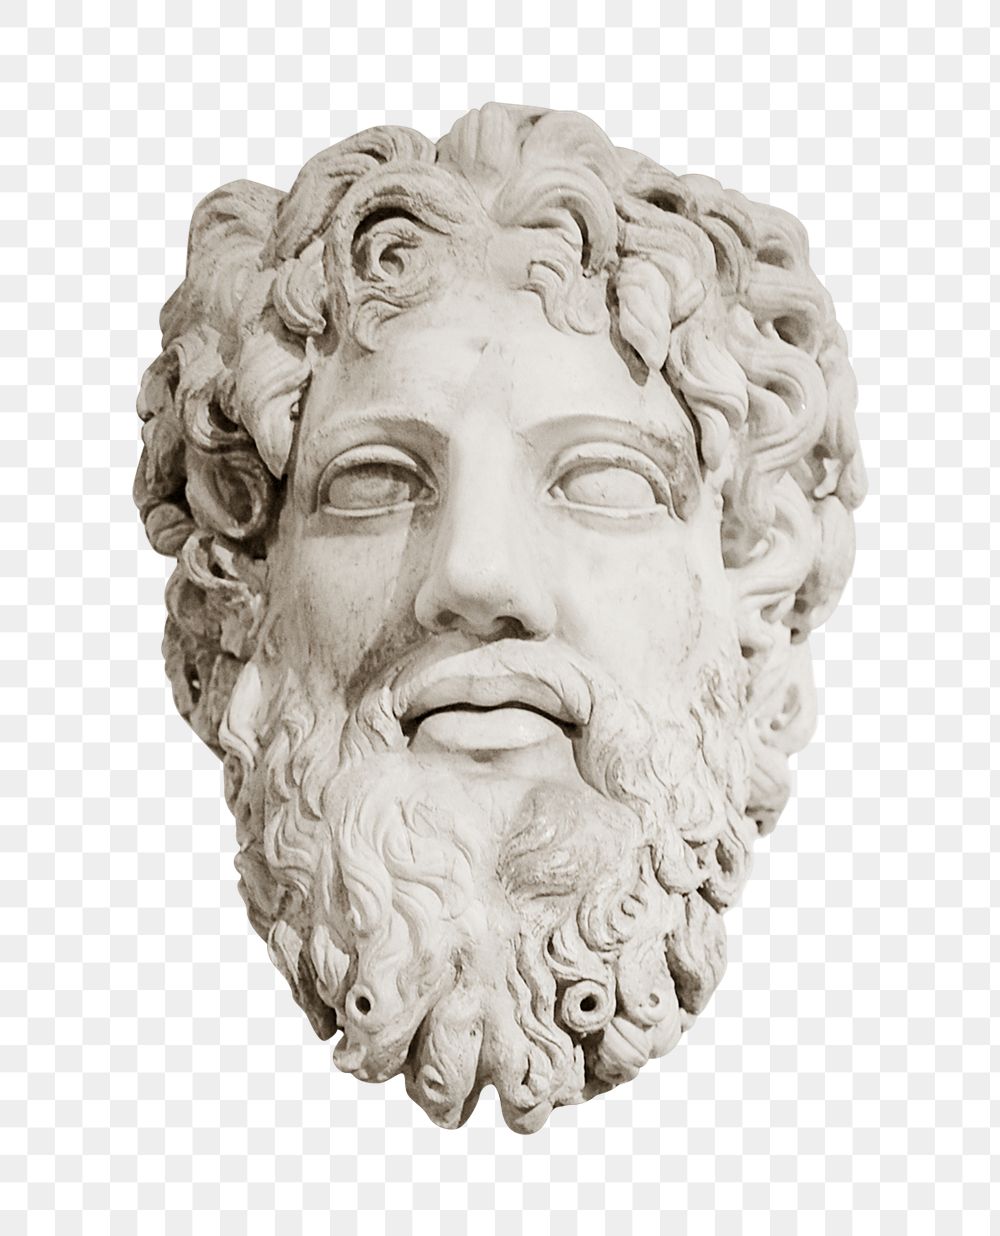 Zeus head sculpture png sticker, transparent background